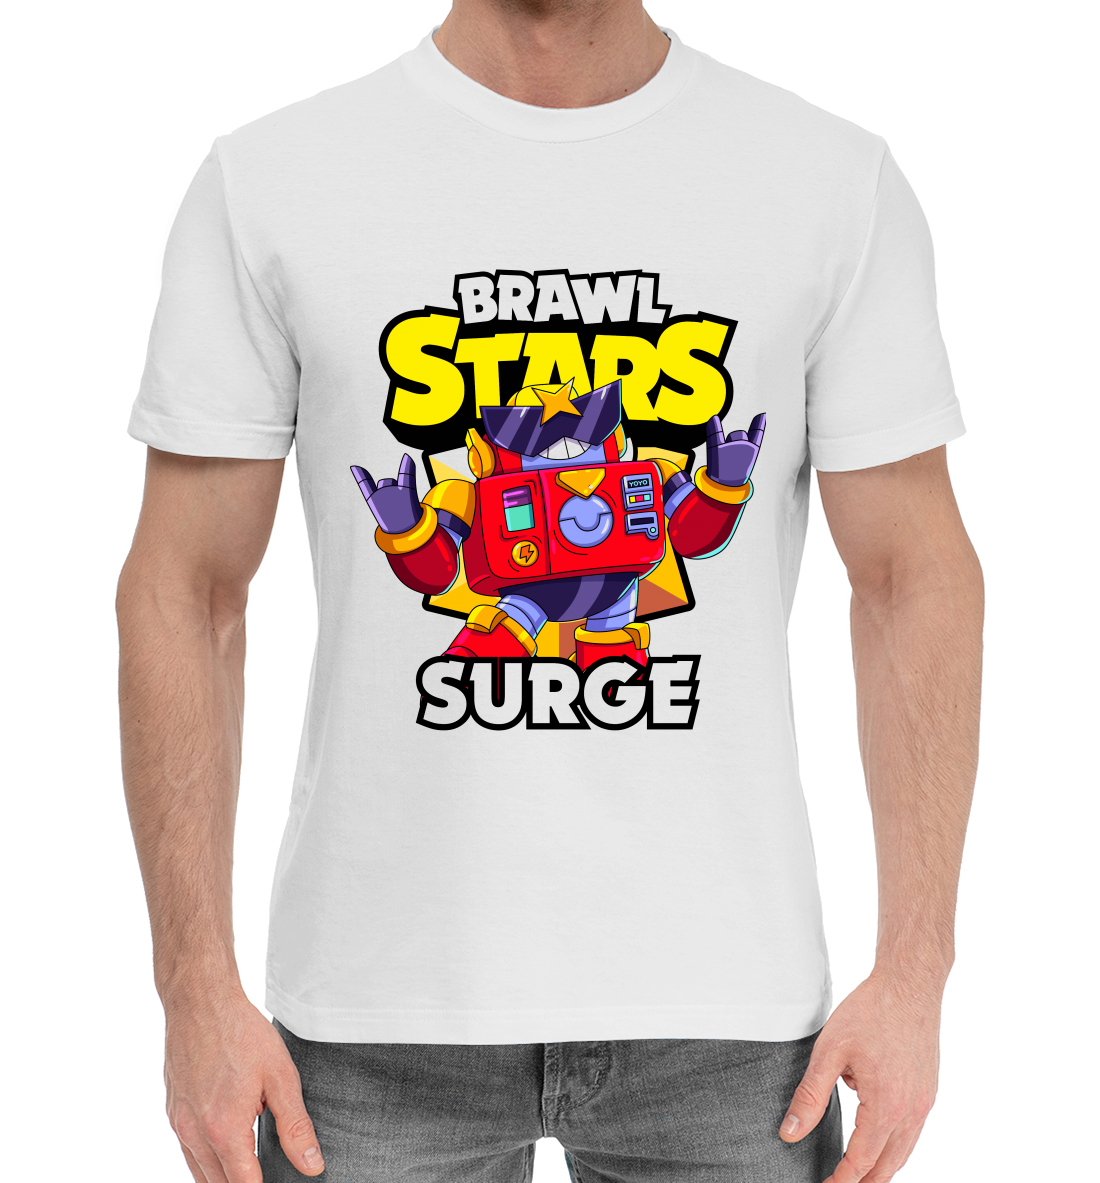 Мужская Хлопковая футболка с принтом Brawl Stars, Surge, артикул CLH-418828-hfu-2mp